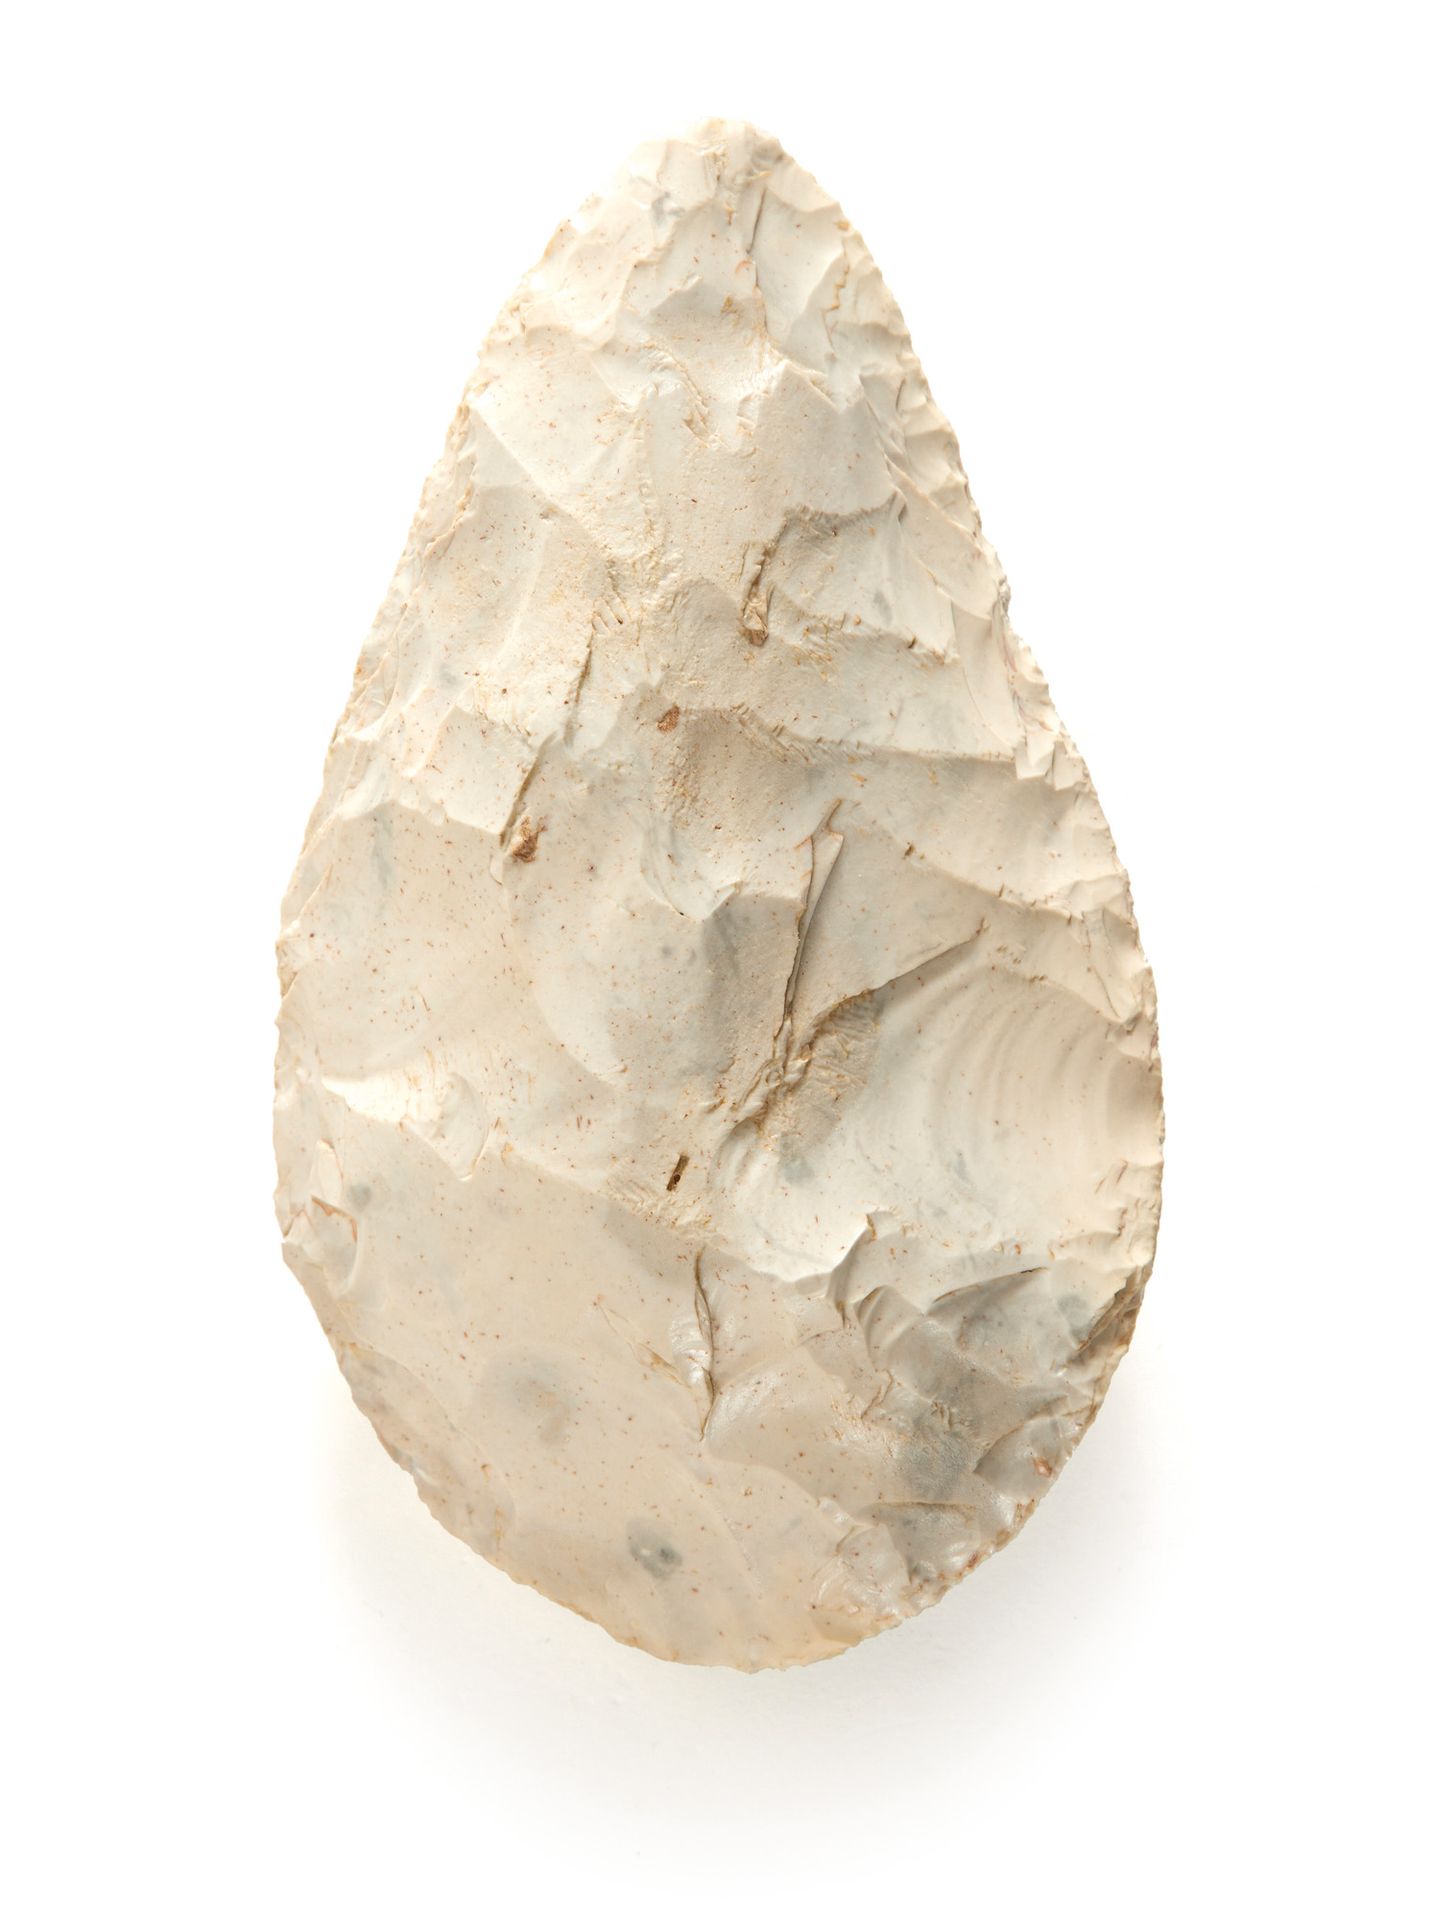 Biface amygdaloïde 杏仁状双刃剑

带正弦波的叶片。非常好的标本。

白色燧石。

法国，晚期Acheulean。

刻有 "Bois-Gui&hellip;